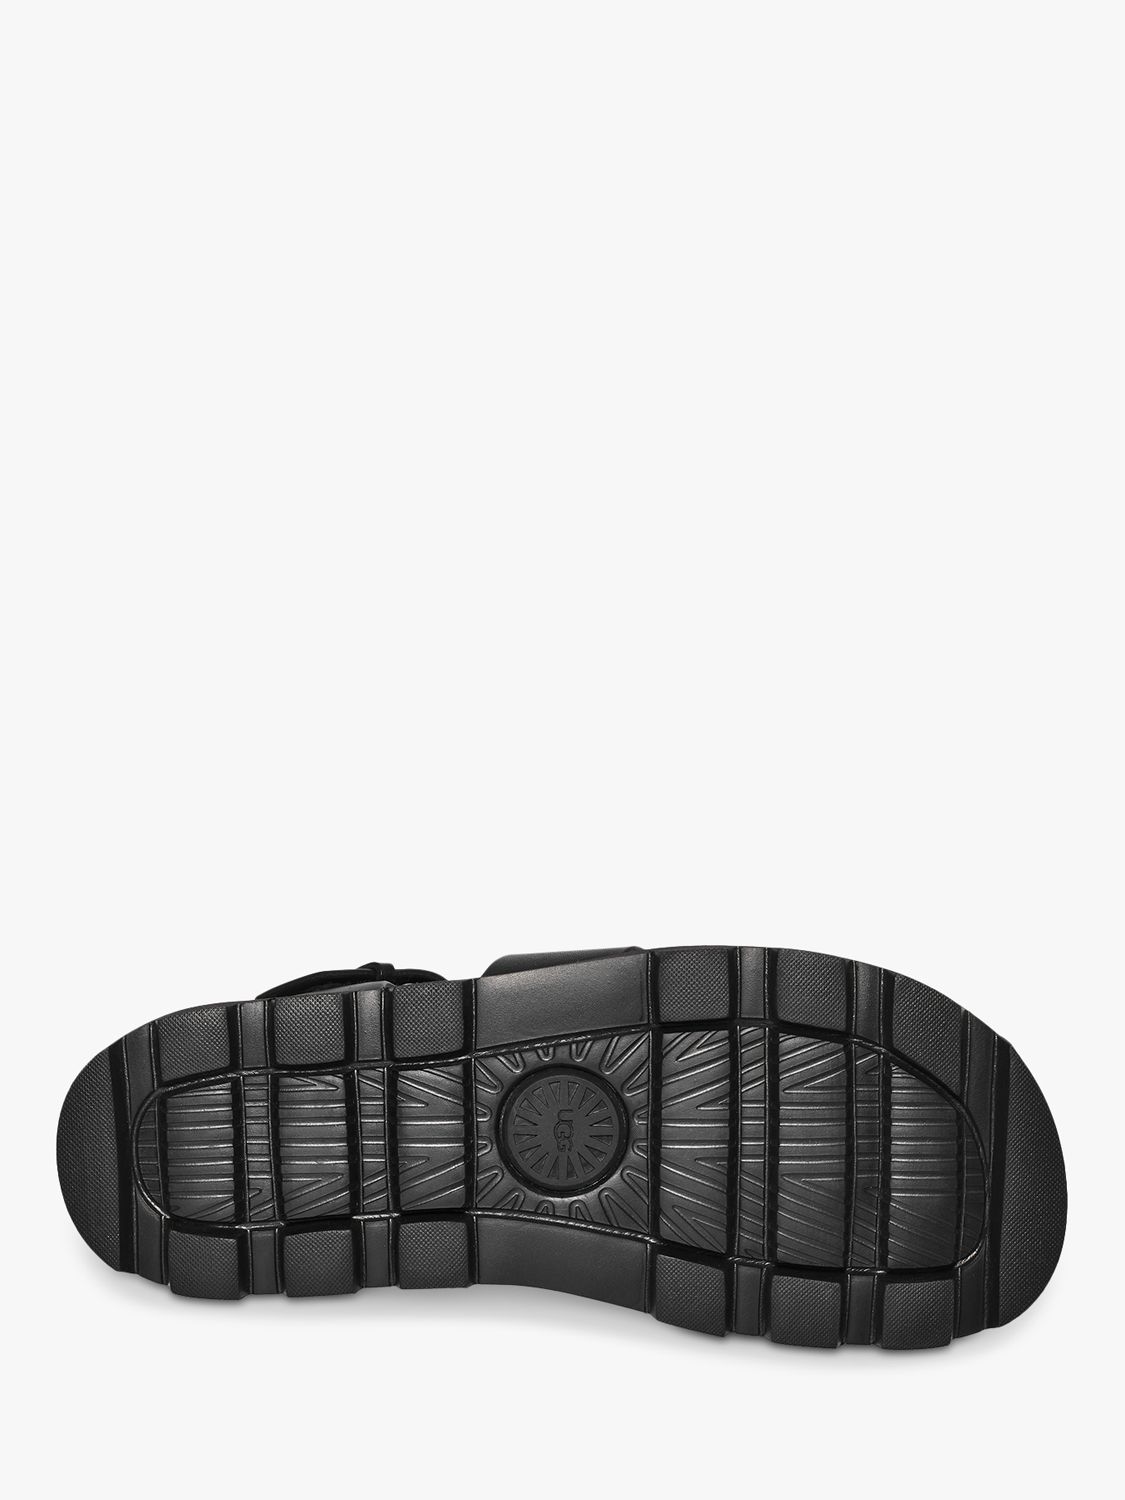 Buy UGG Capitelle Leather Buckle Strap Sandals Online at johnlewis.com